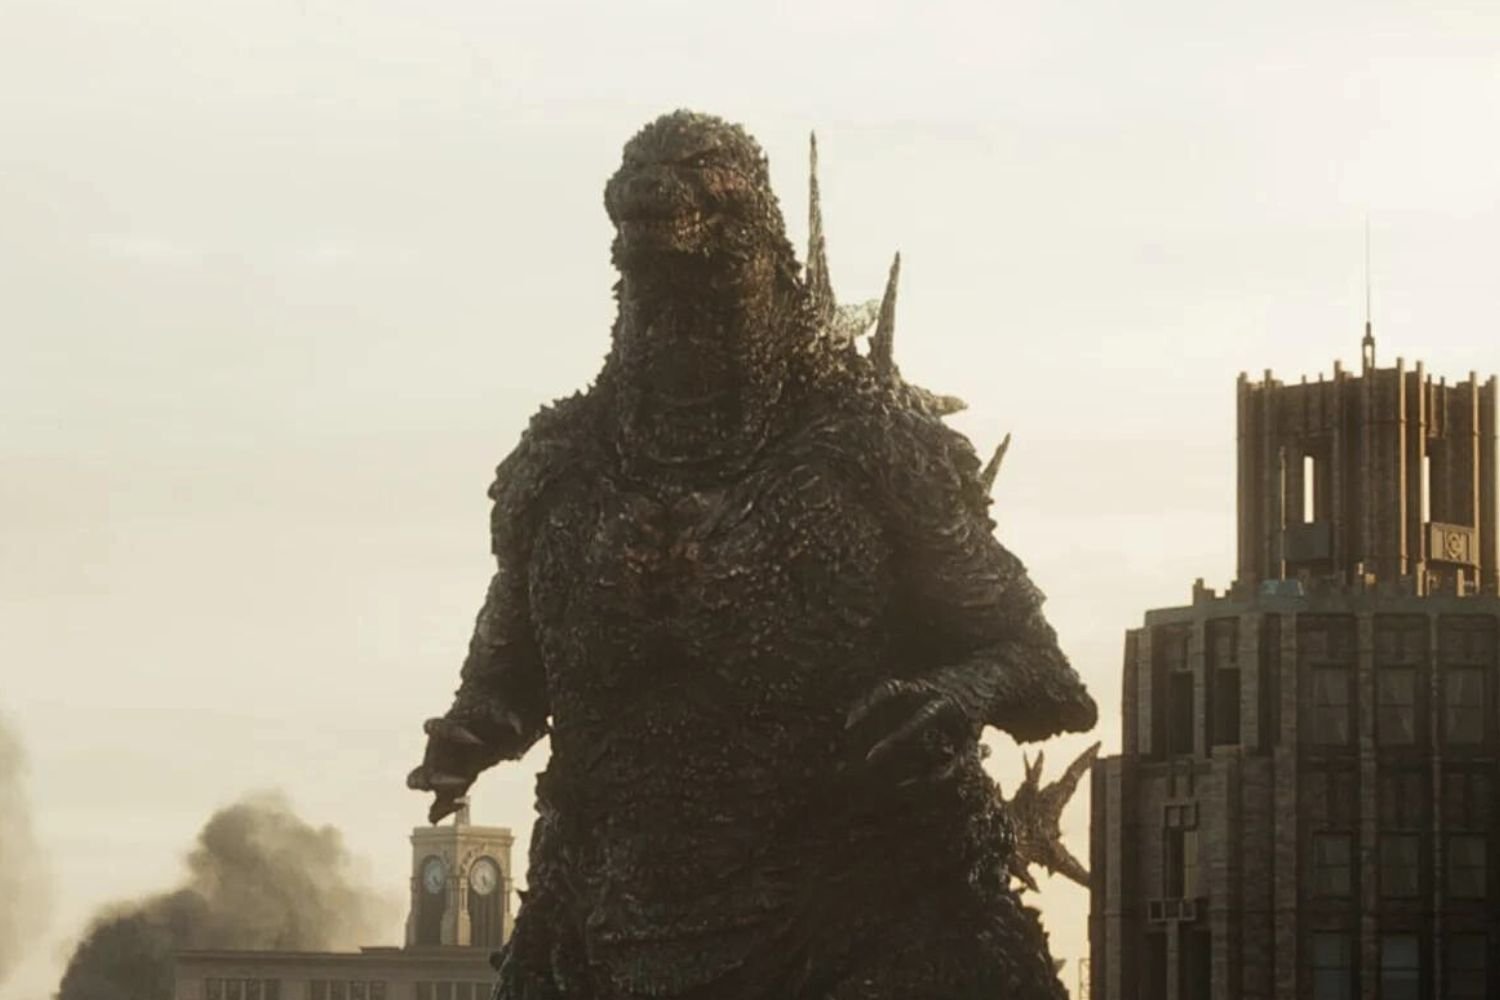 Godzilla Minus One Oscars